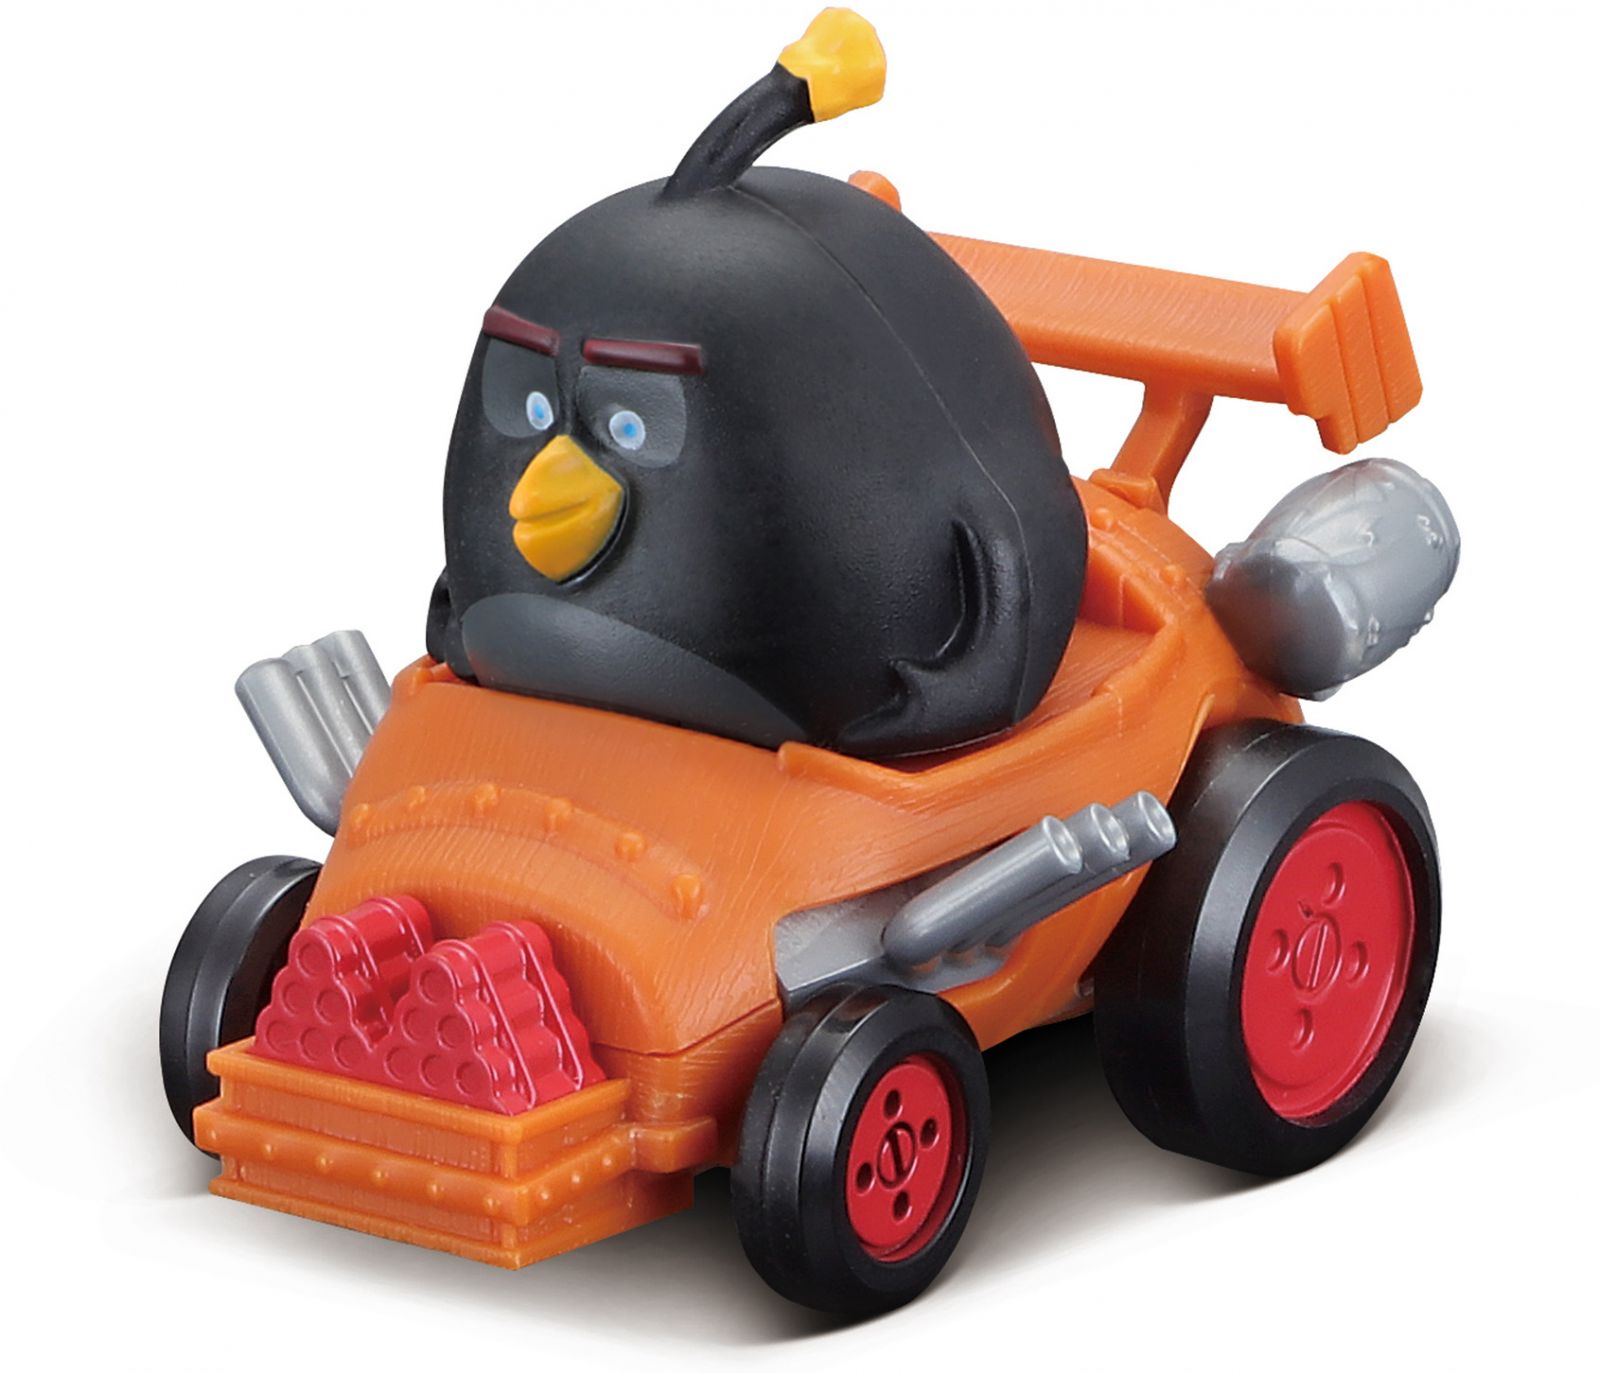 Maisto autíčko Angry Birds CRASHERS - Bomb´s Barrel Racer